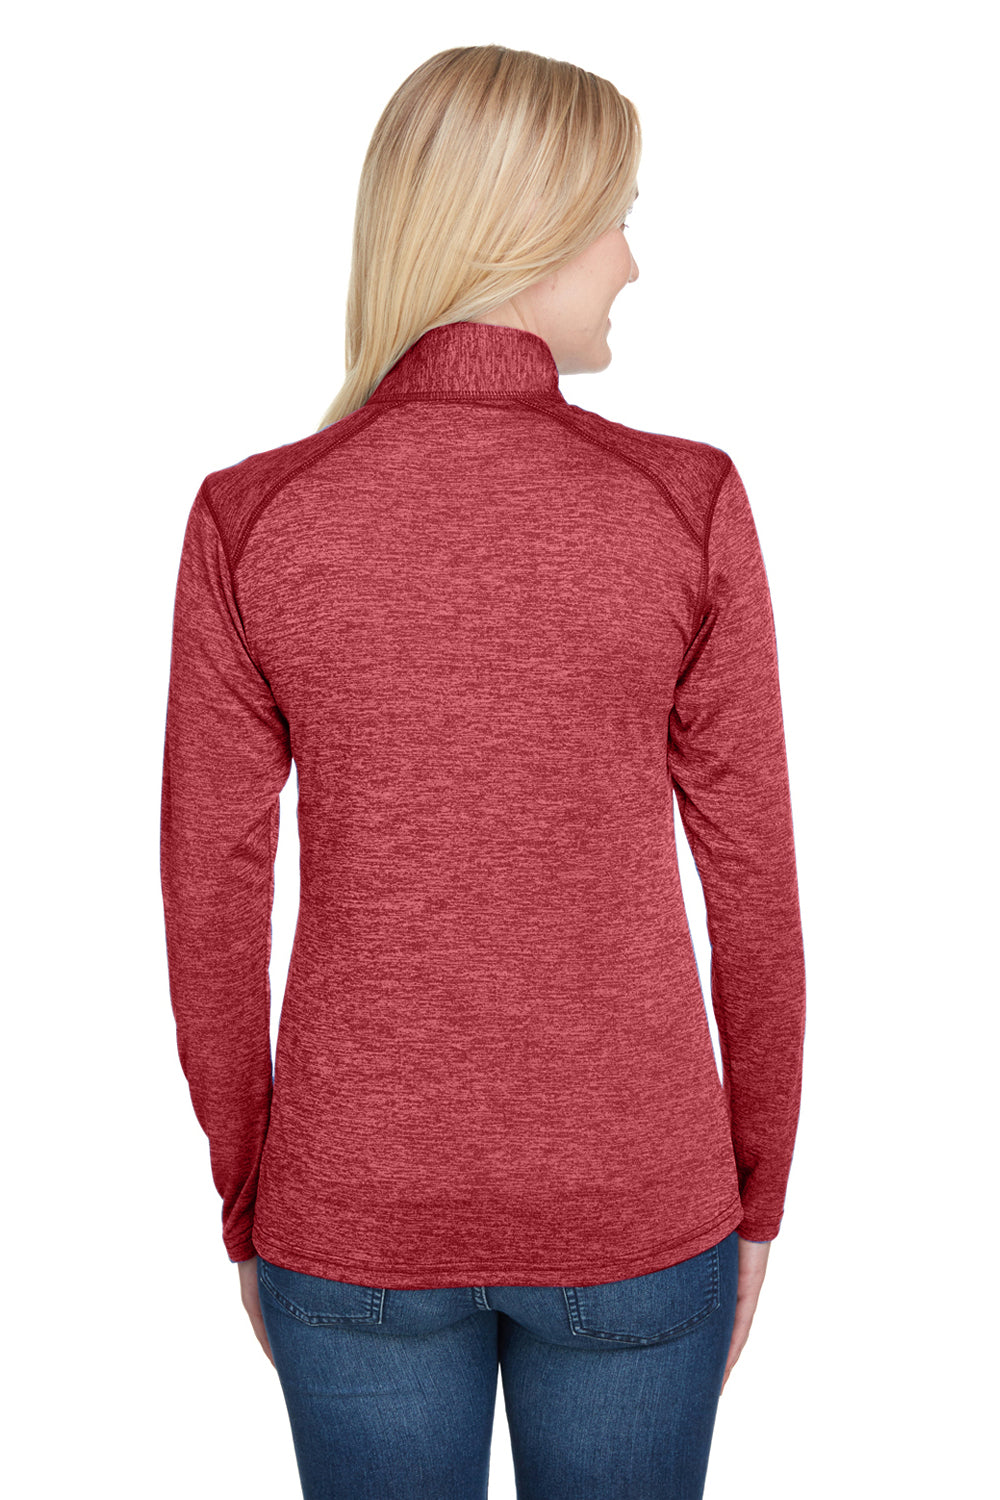 A4 NW4010 Womens Tonal Space Dye Performance Moisture Wicking 1/4 Zip Sweatshirt Red Model Back